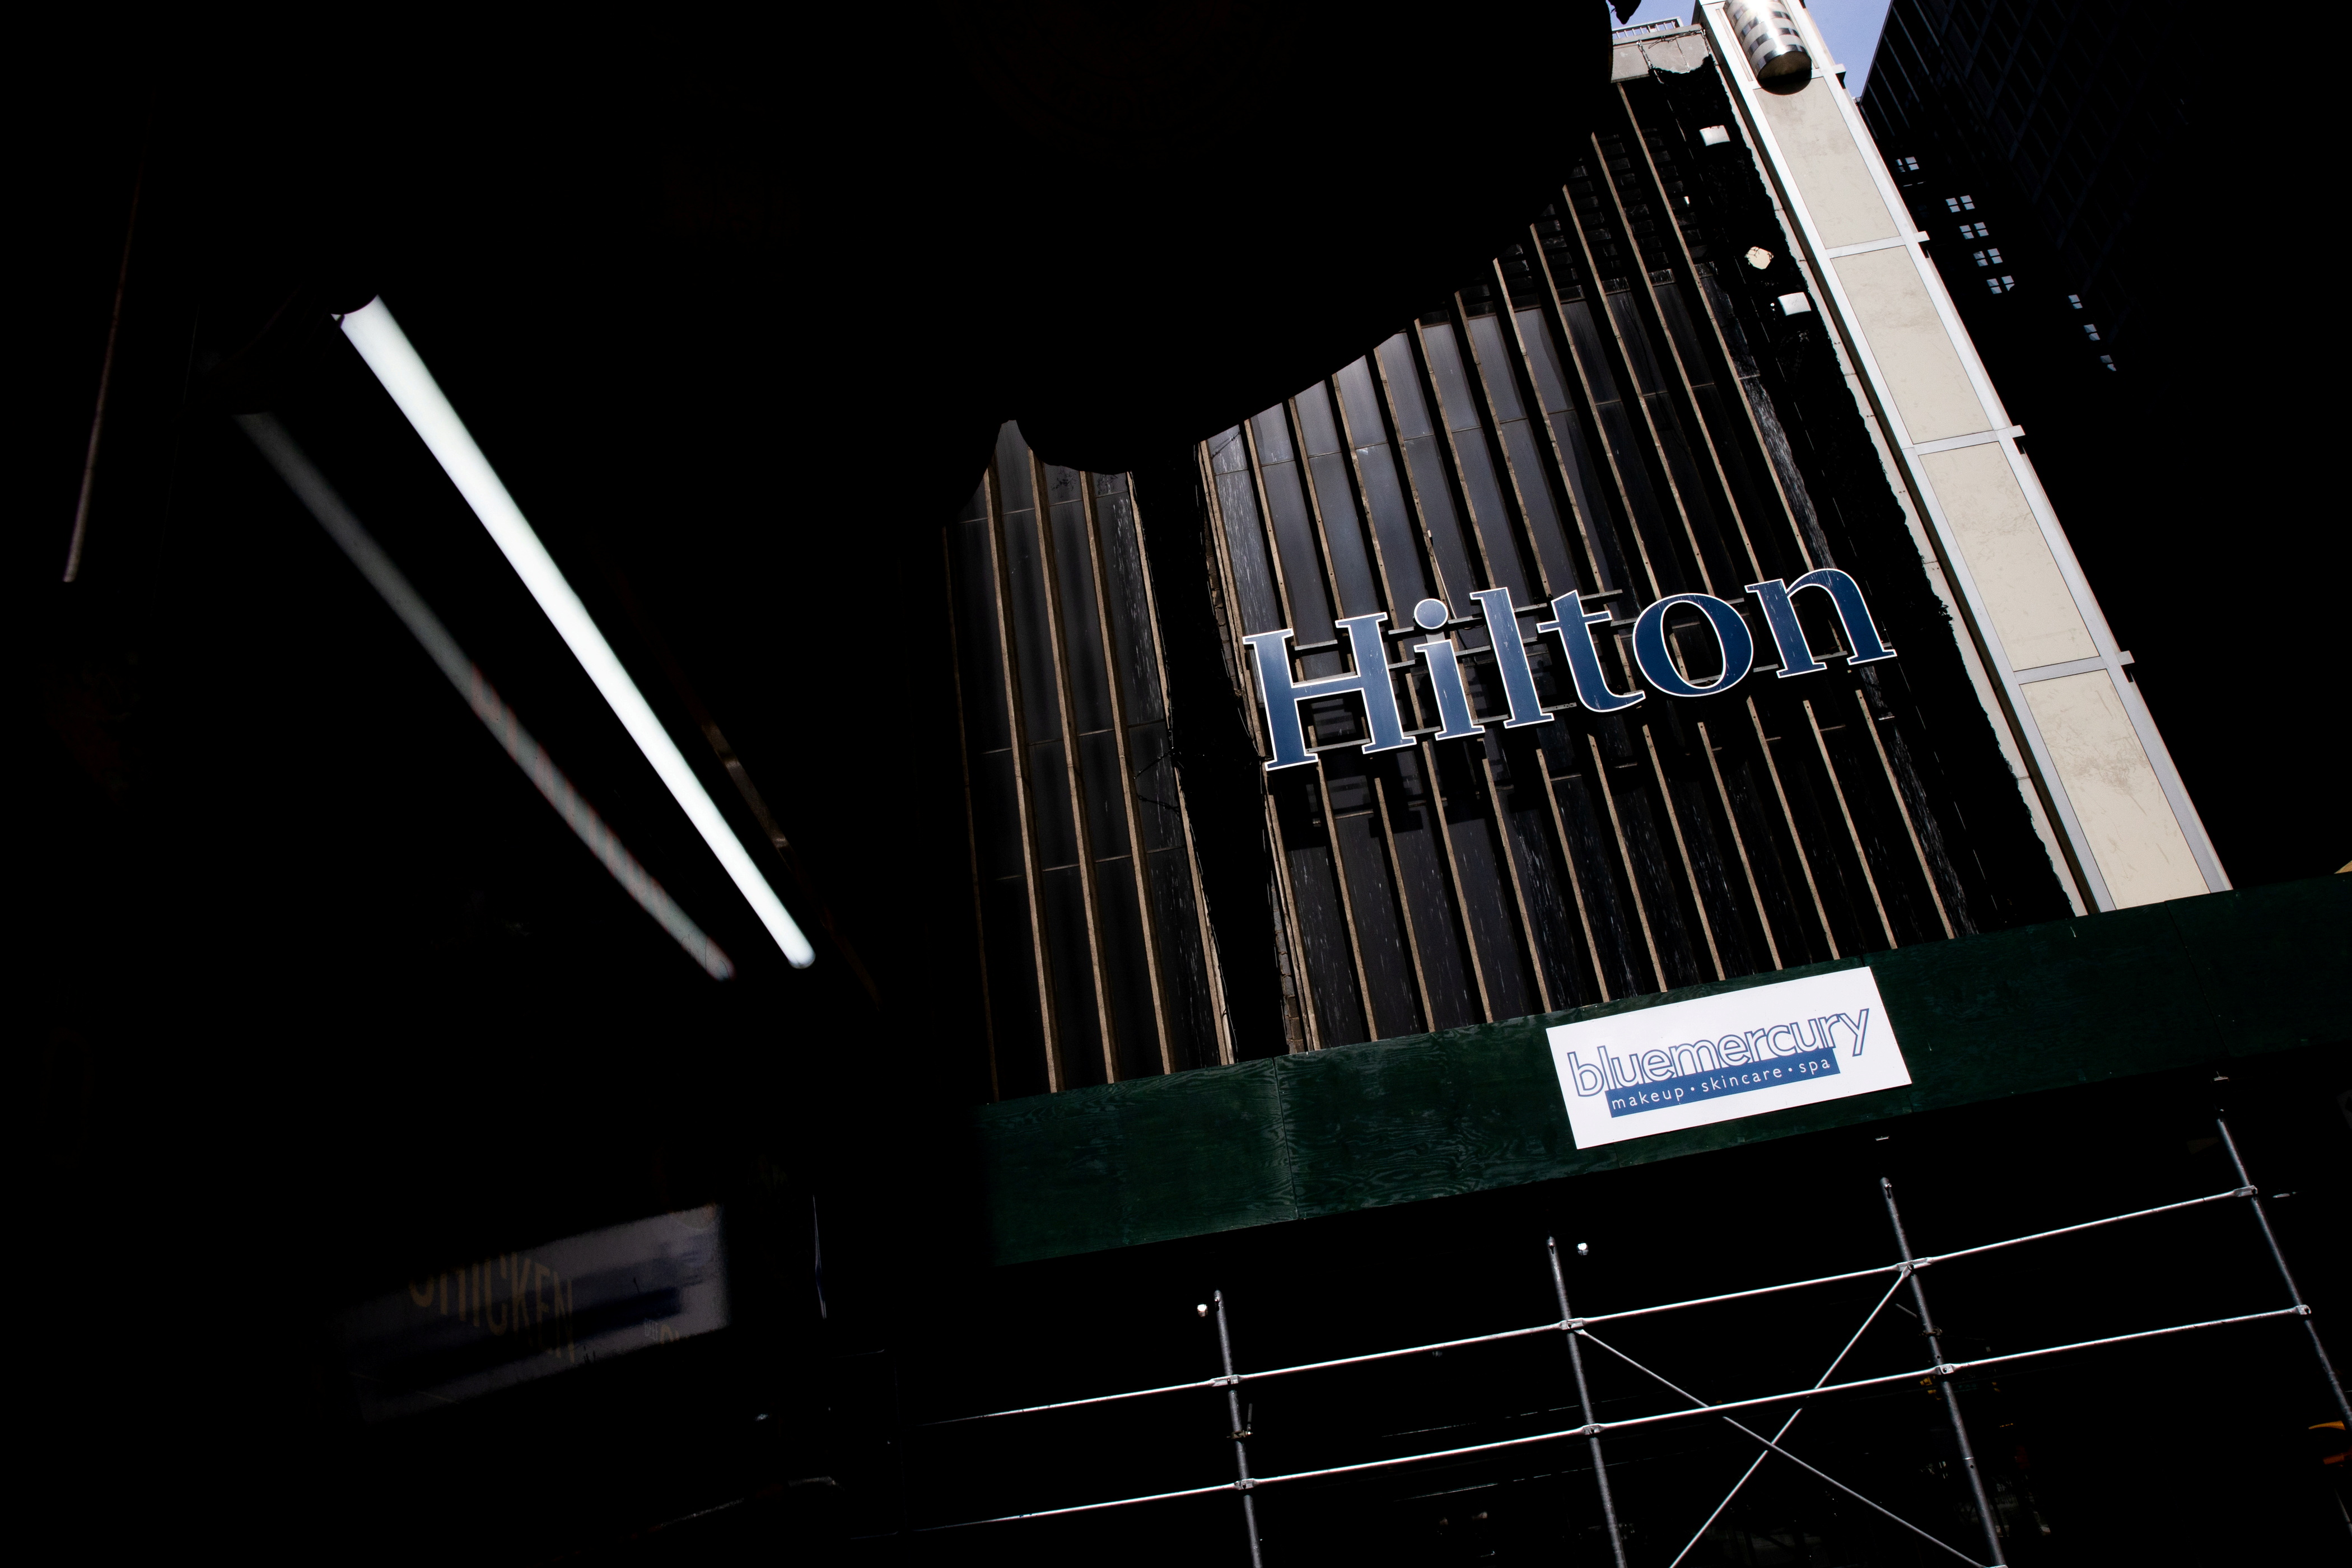 Hilton hotel logo is seen on 52nd street  following the outbreak of coronavirus disease (COVID-19) in New York City